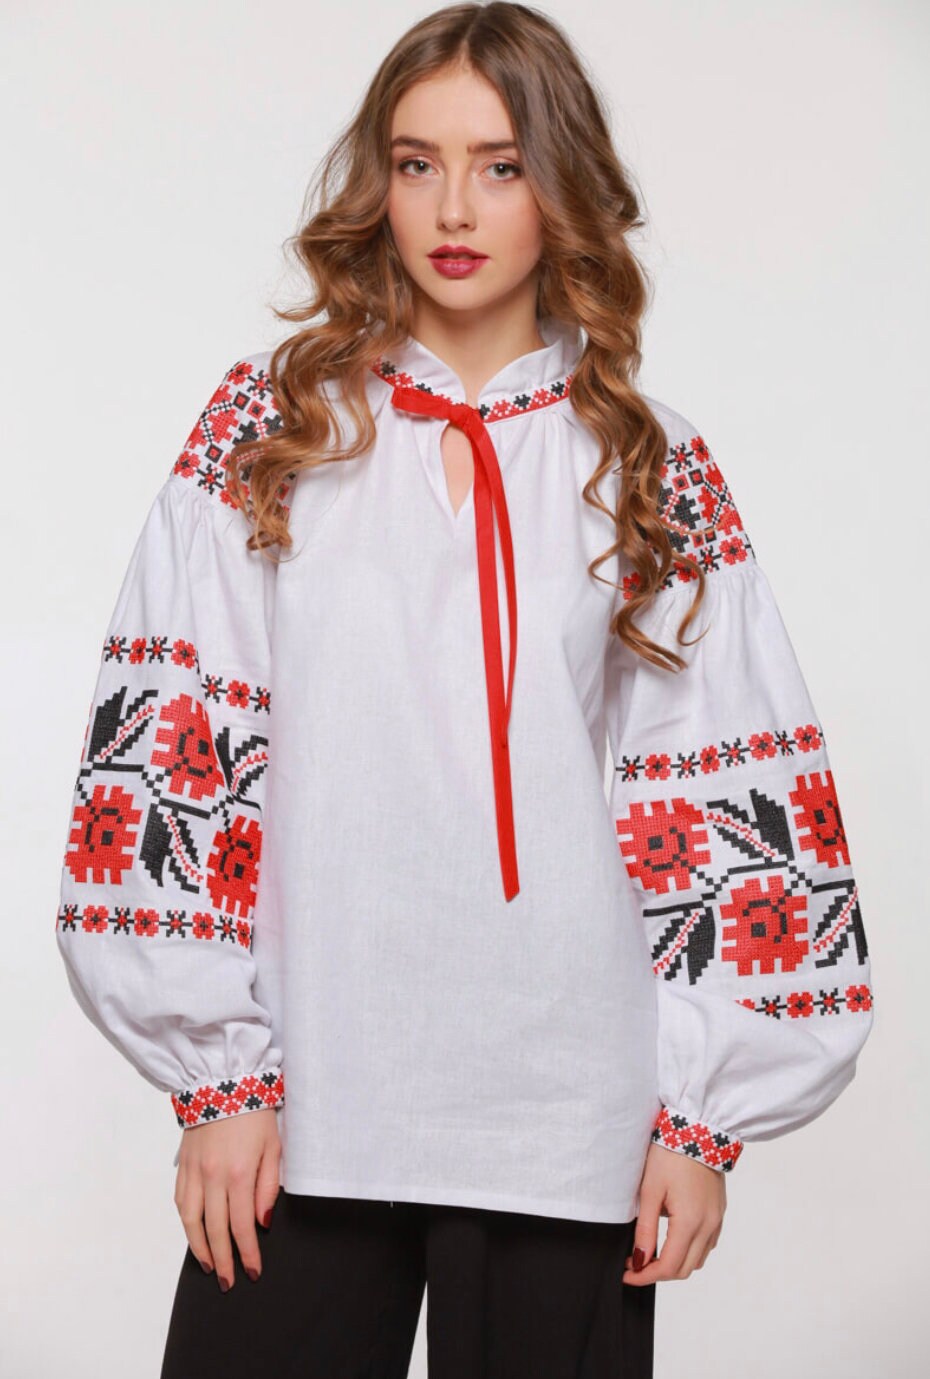 Ukrainian vyshyvanka blouse Ukrainian embroidered blouse | Etsy